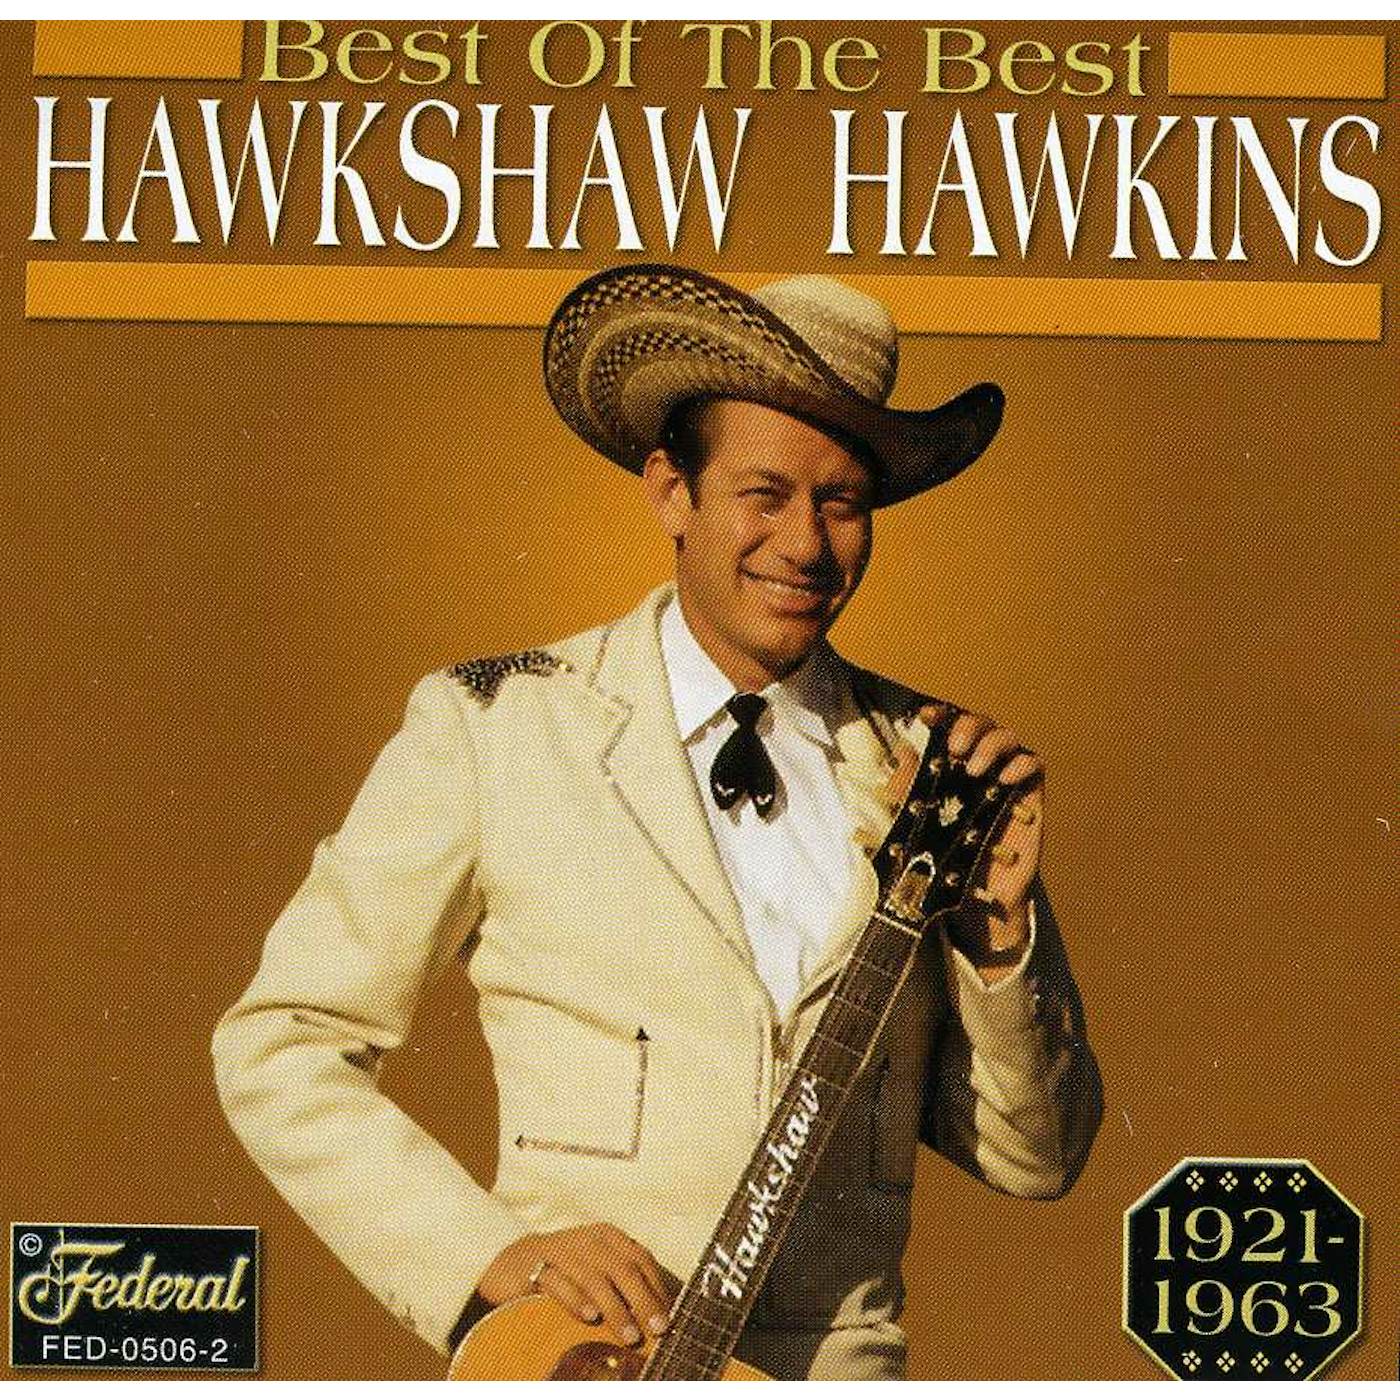 Hawkshaw Hawkins BEST OF THE BEST CD